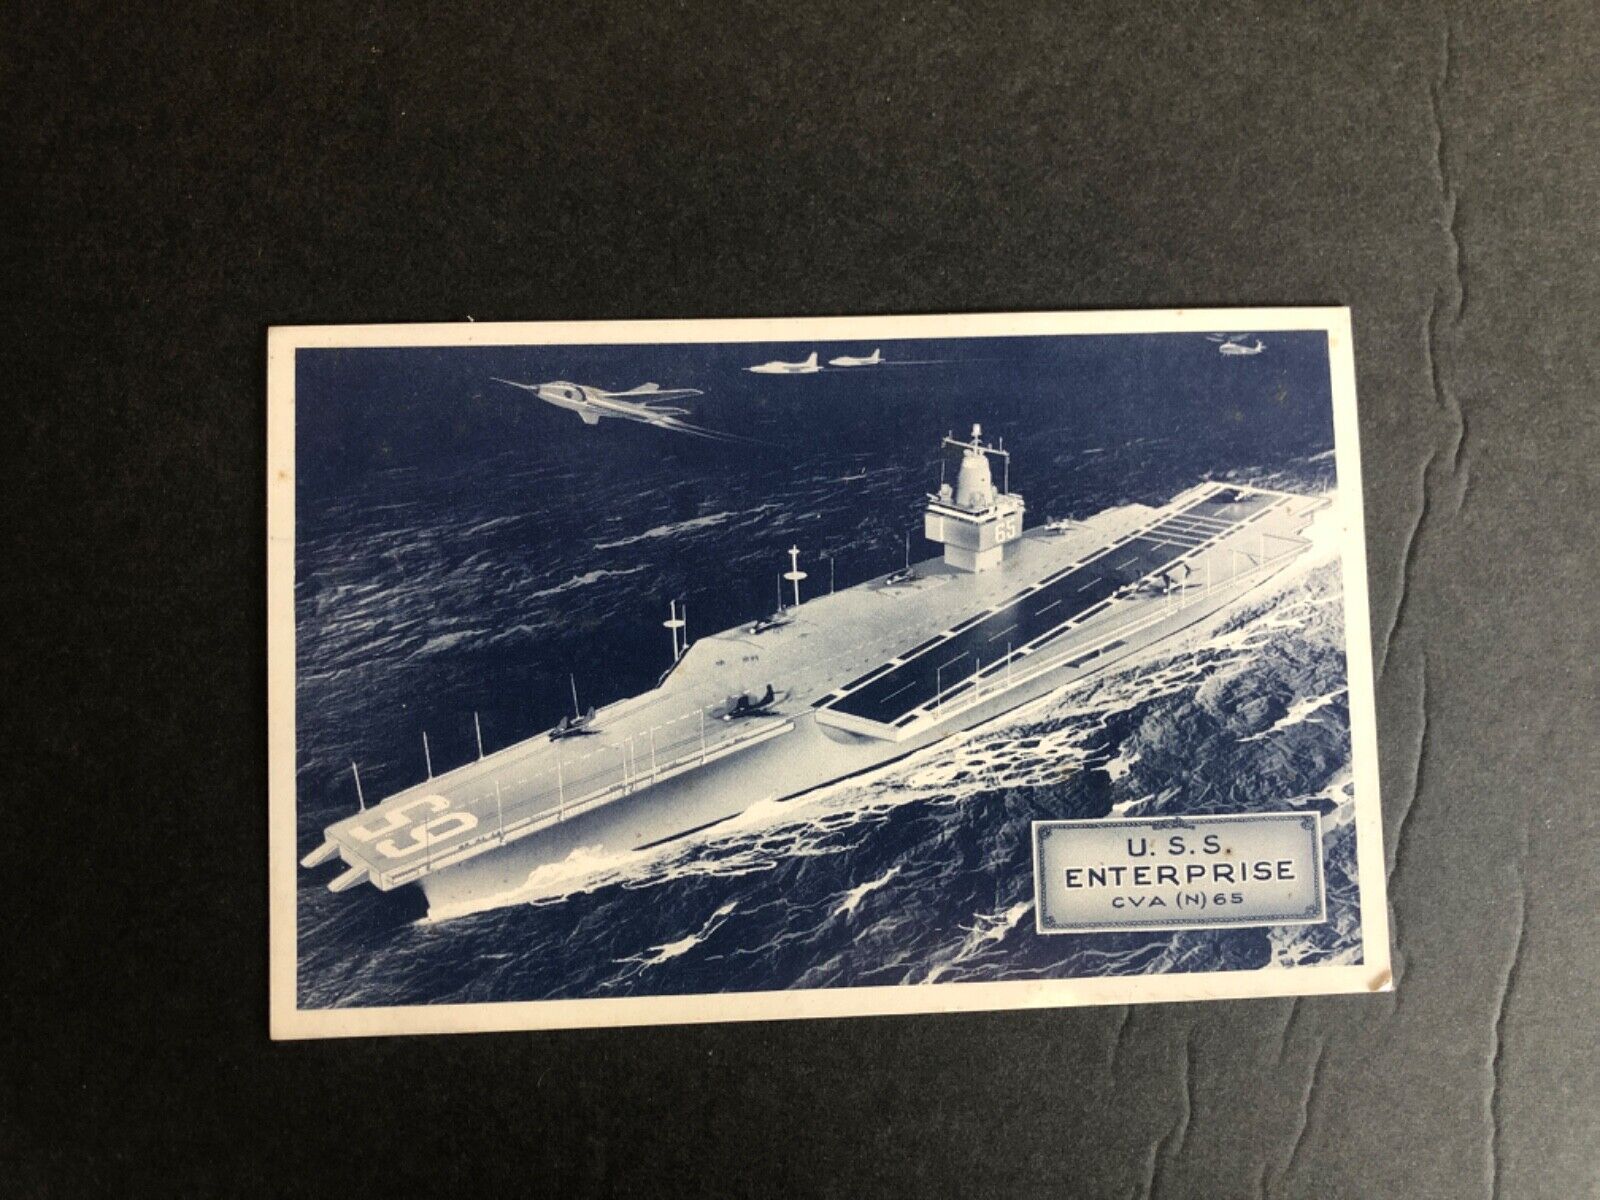 U.S.S Enterprise CVA ( N) 65 Pre-Commissioning Postcard